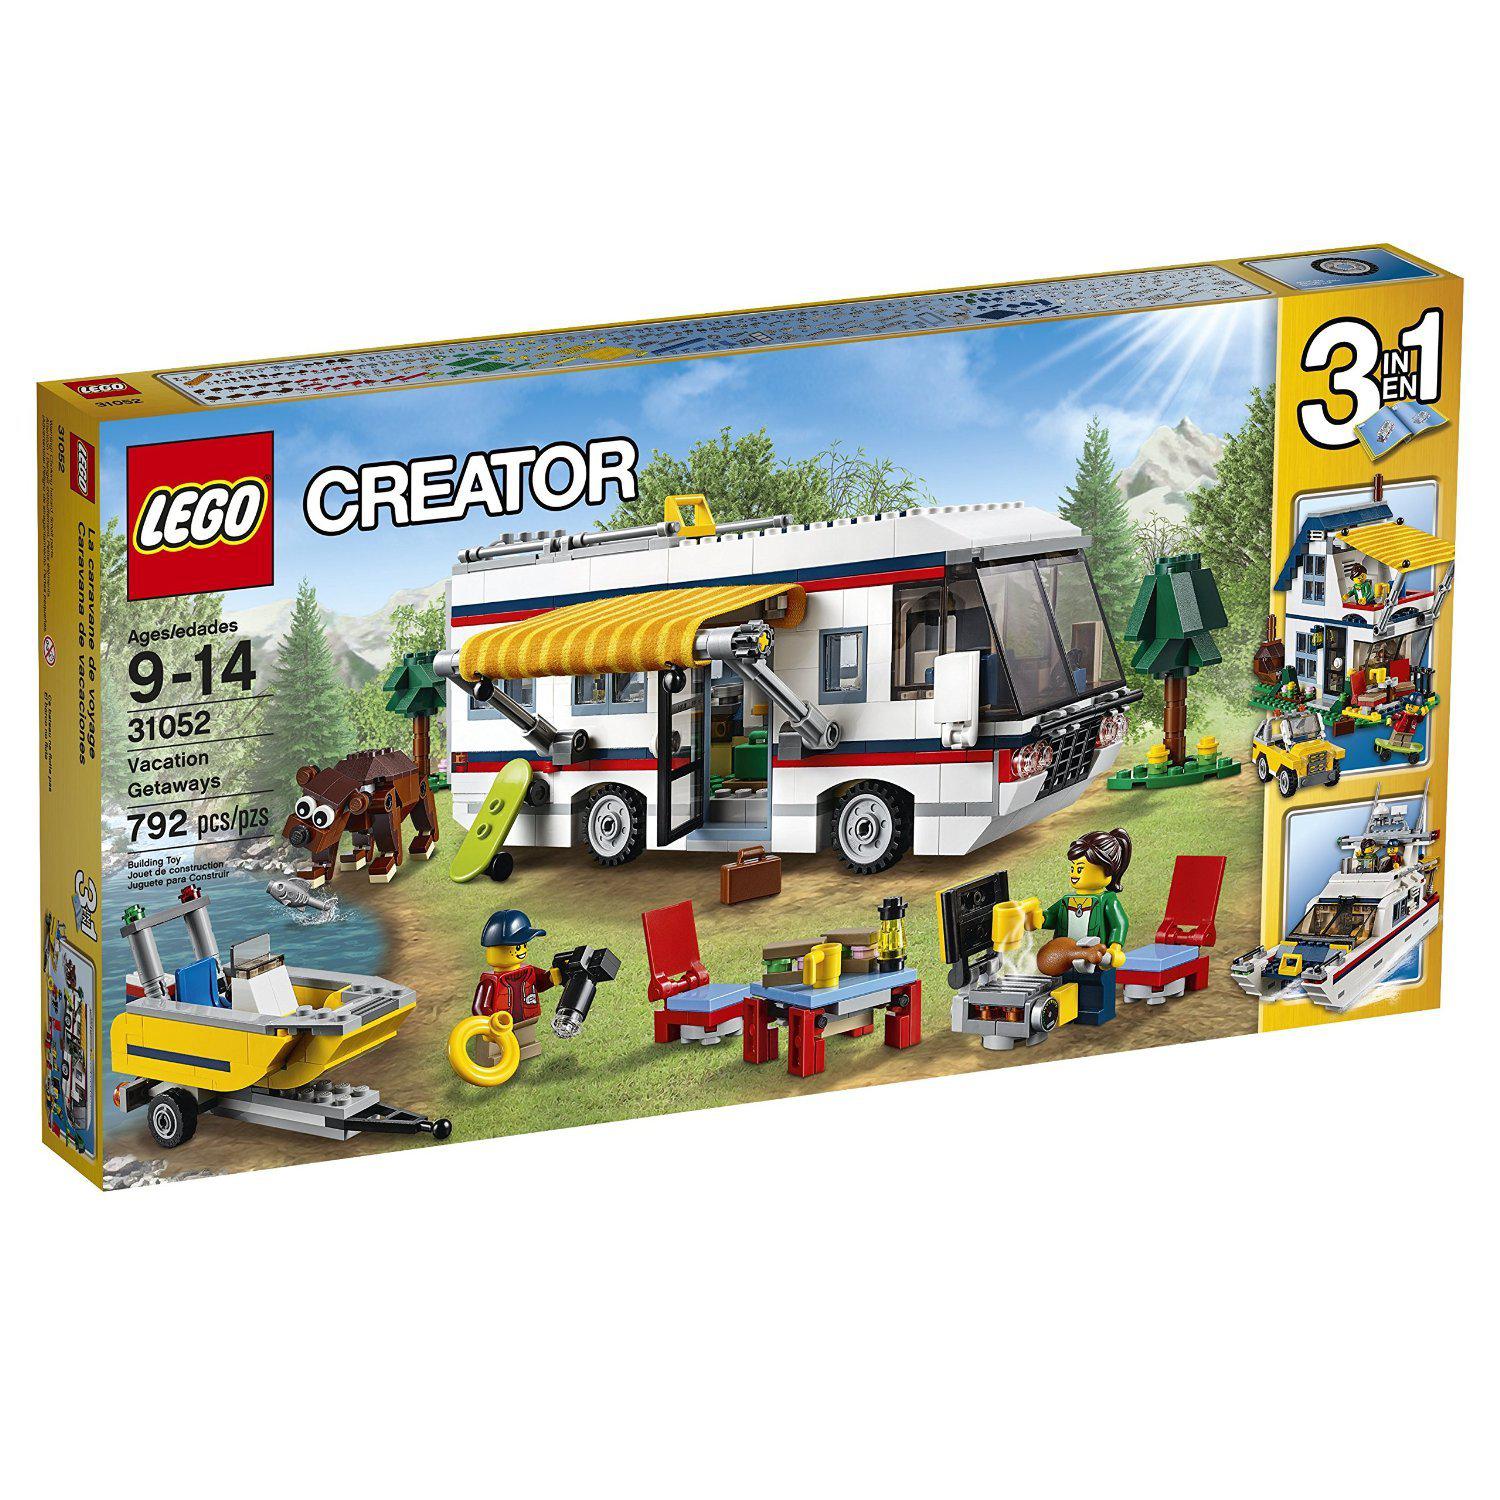 LEGO 乐高 创意百变组 31052 度假露营车+创意系列 31064水上飞机的冒险